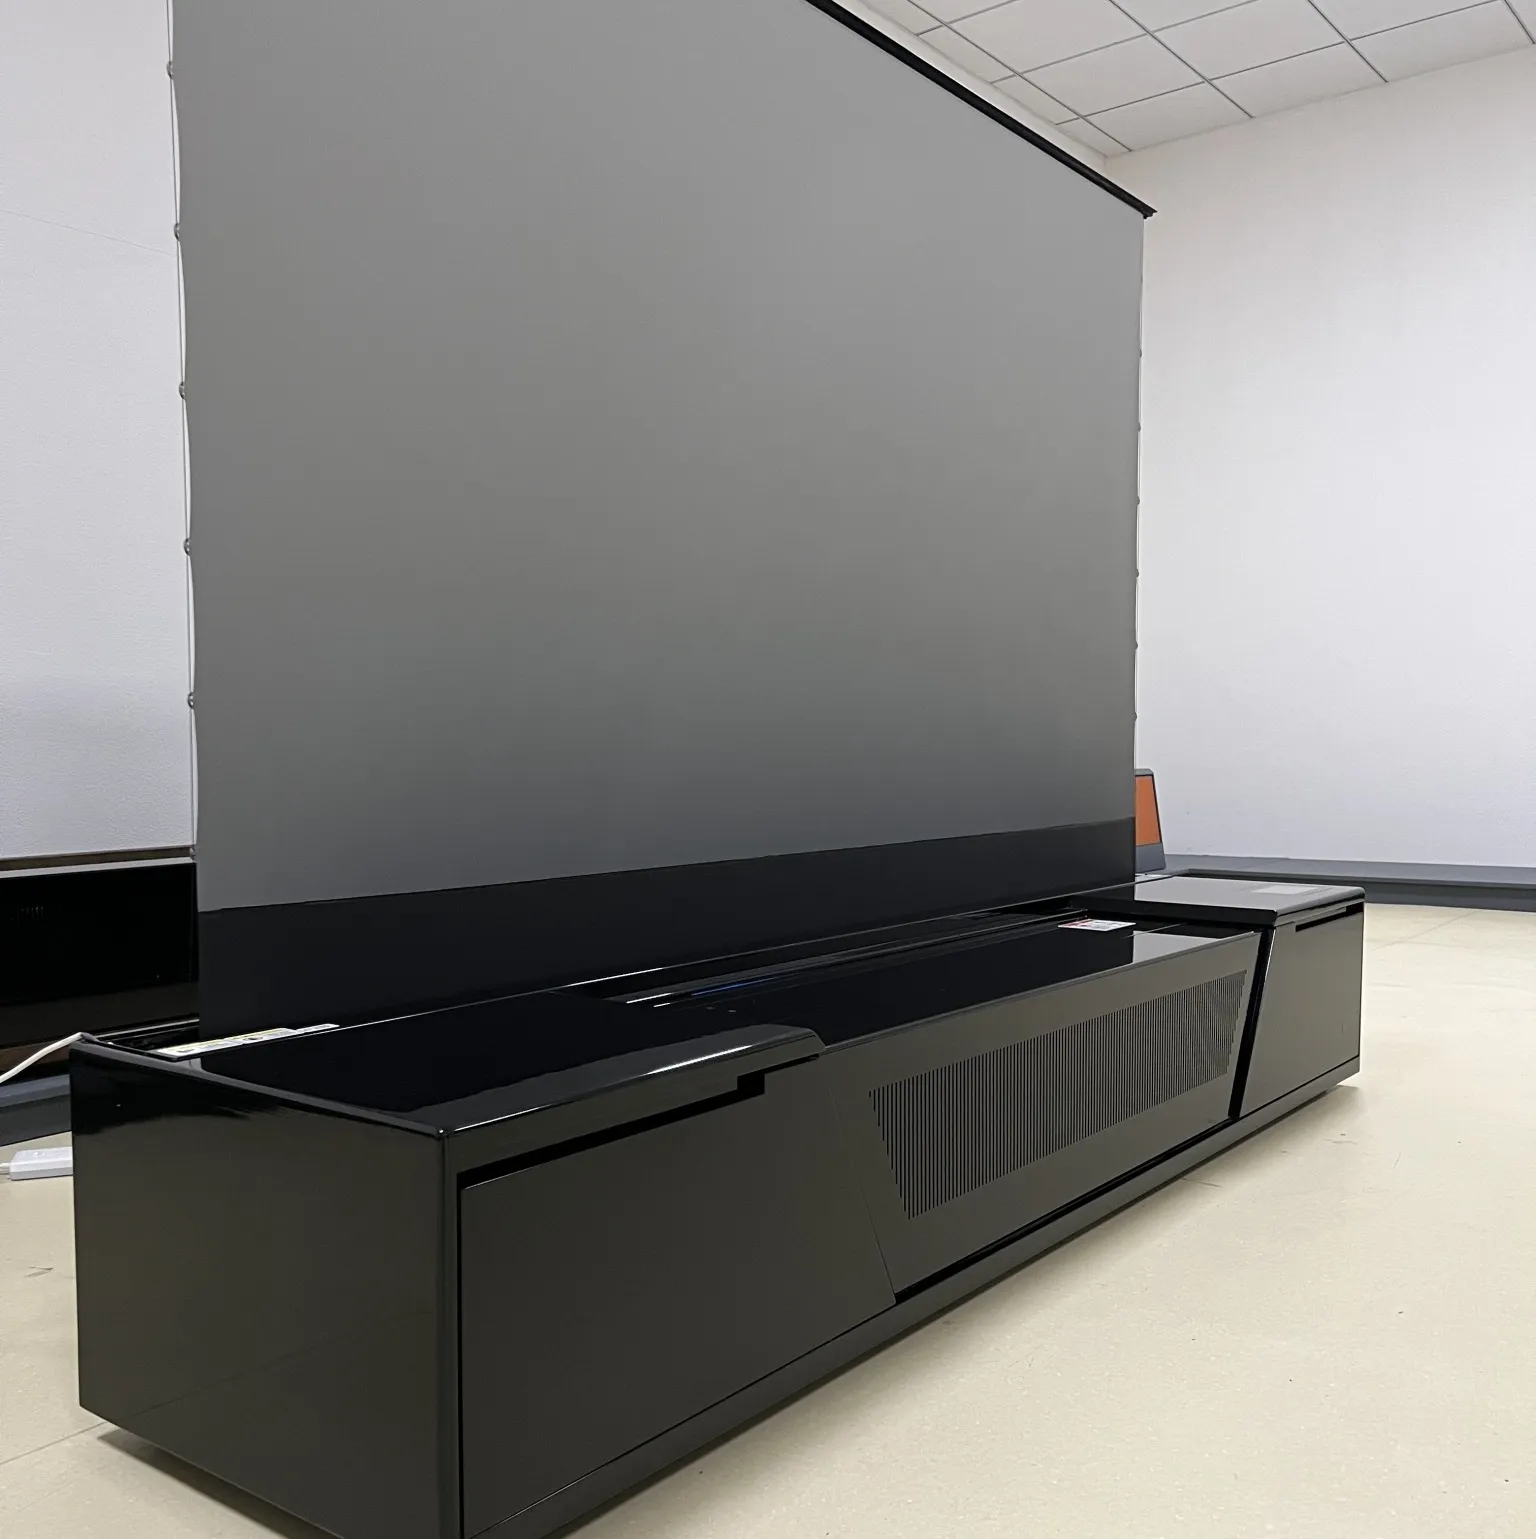 ALR Motorized floor rising projection screen 4K/8K UST laser projector integrated cabinet for 3D Home Cinema